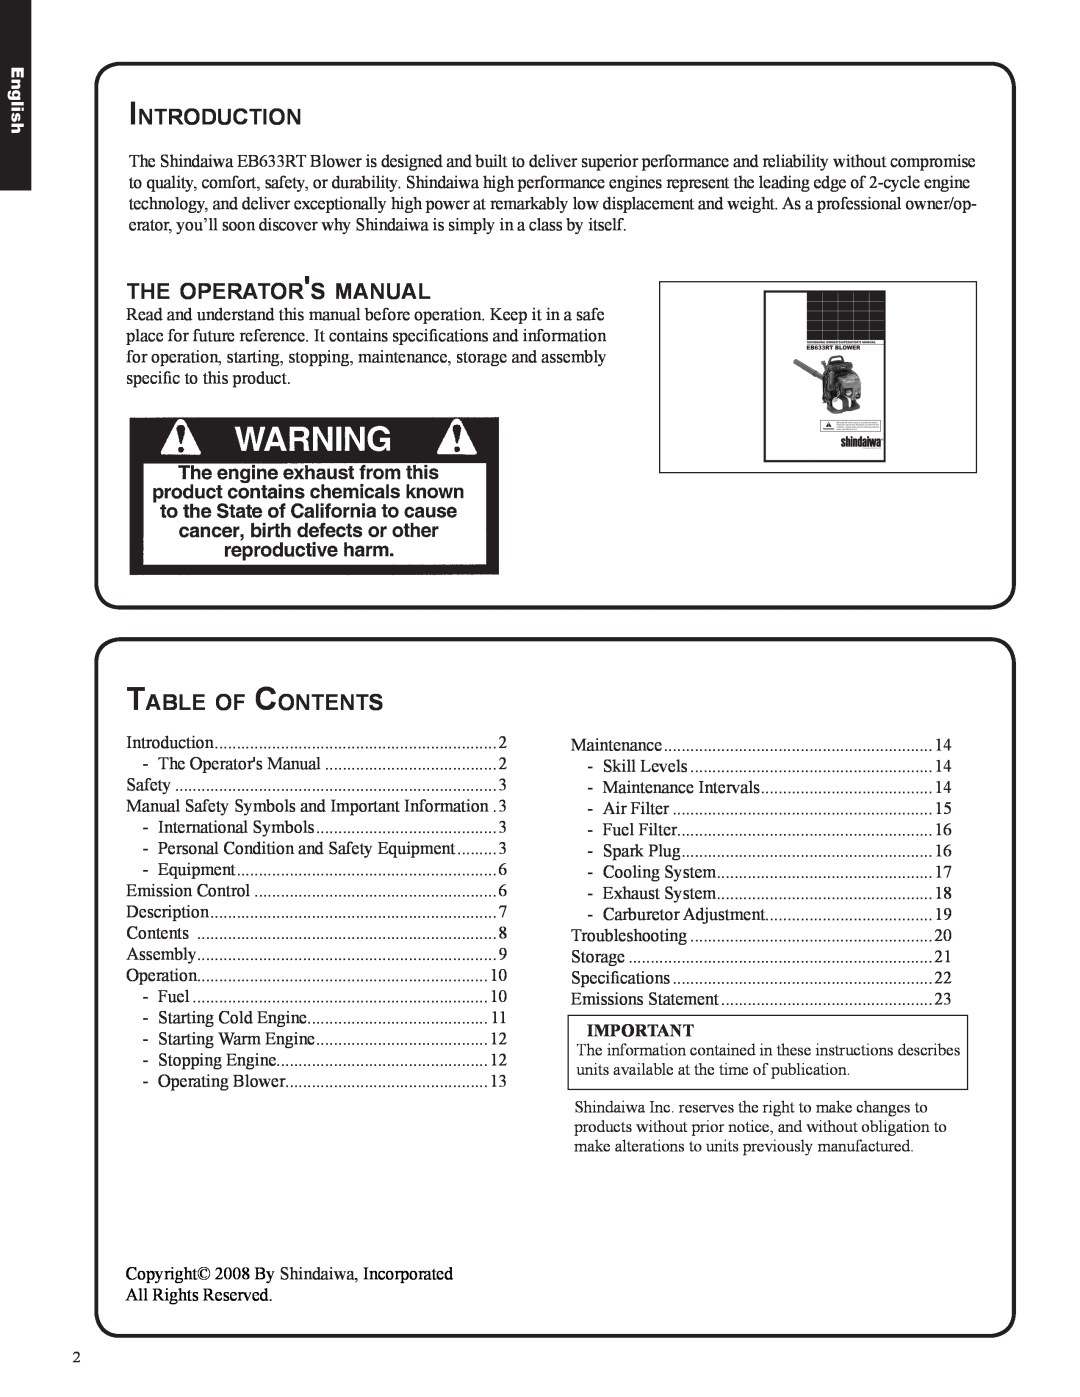 Shindaiwa EB633RT, 82050 Introduction, the operators manual, Table of Contents, English 